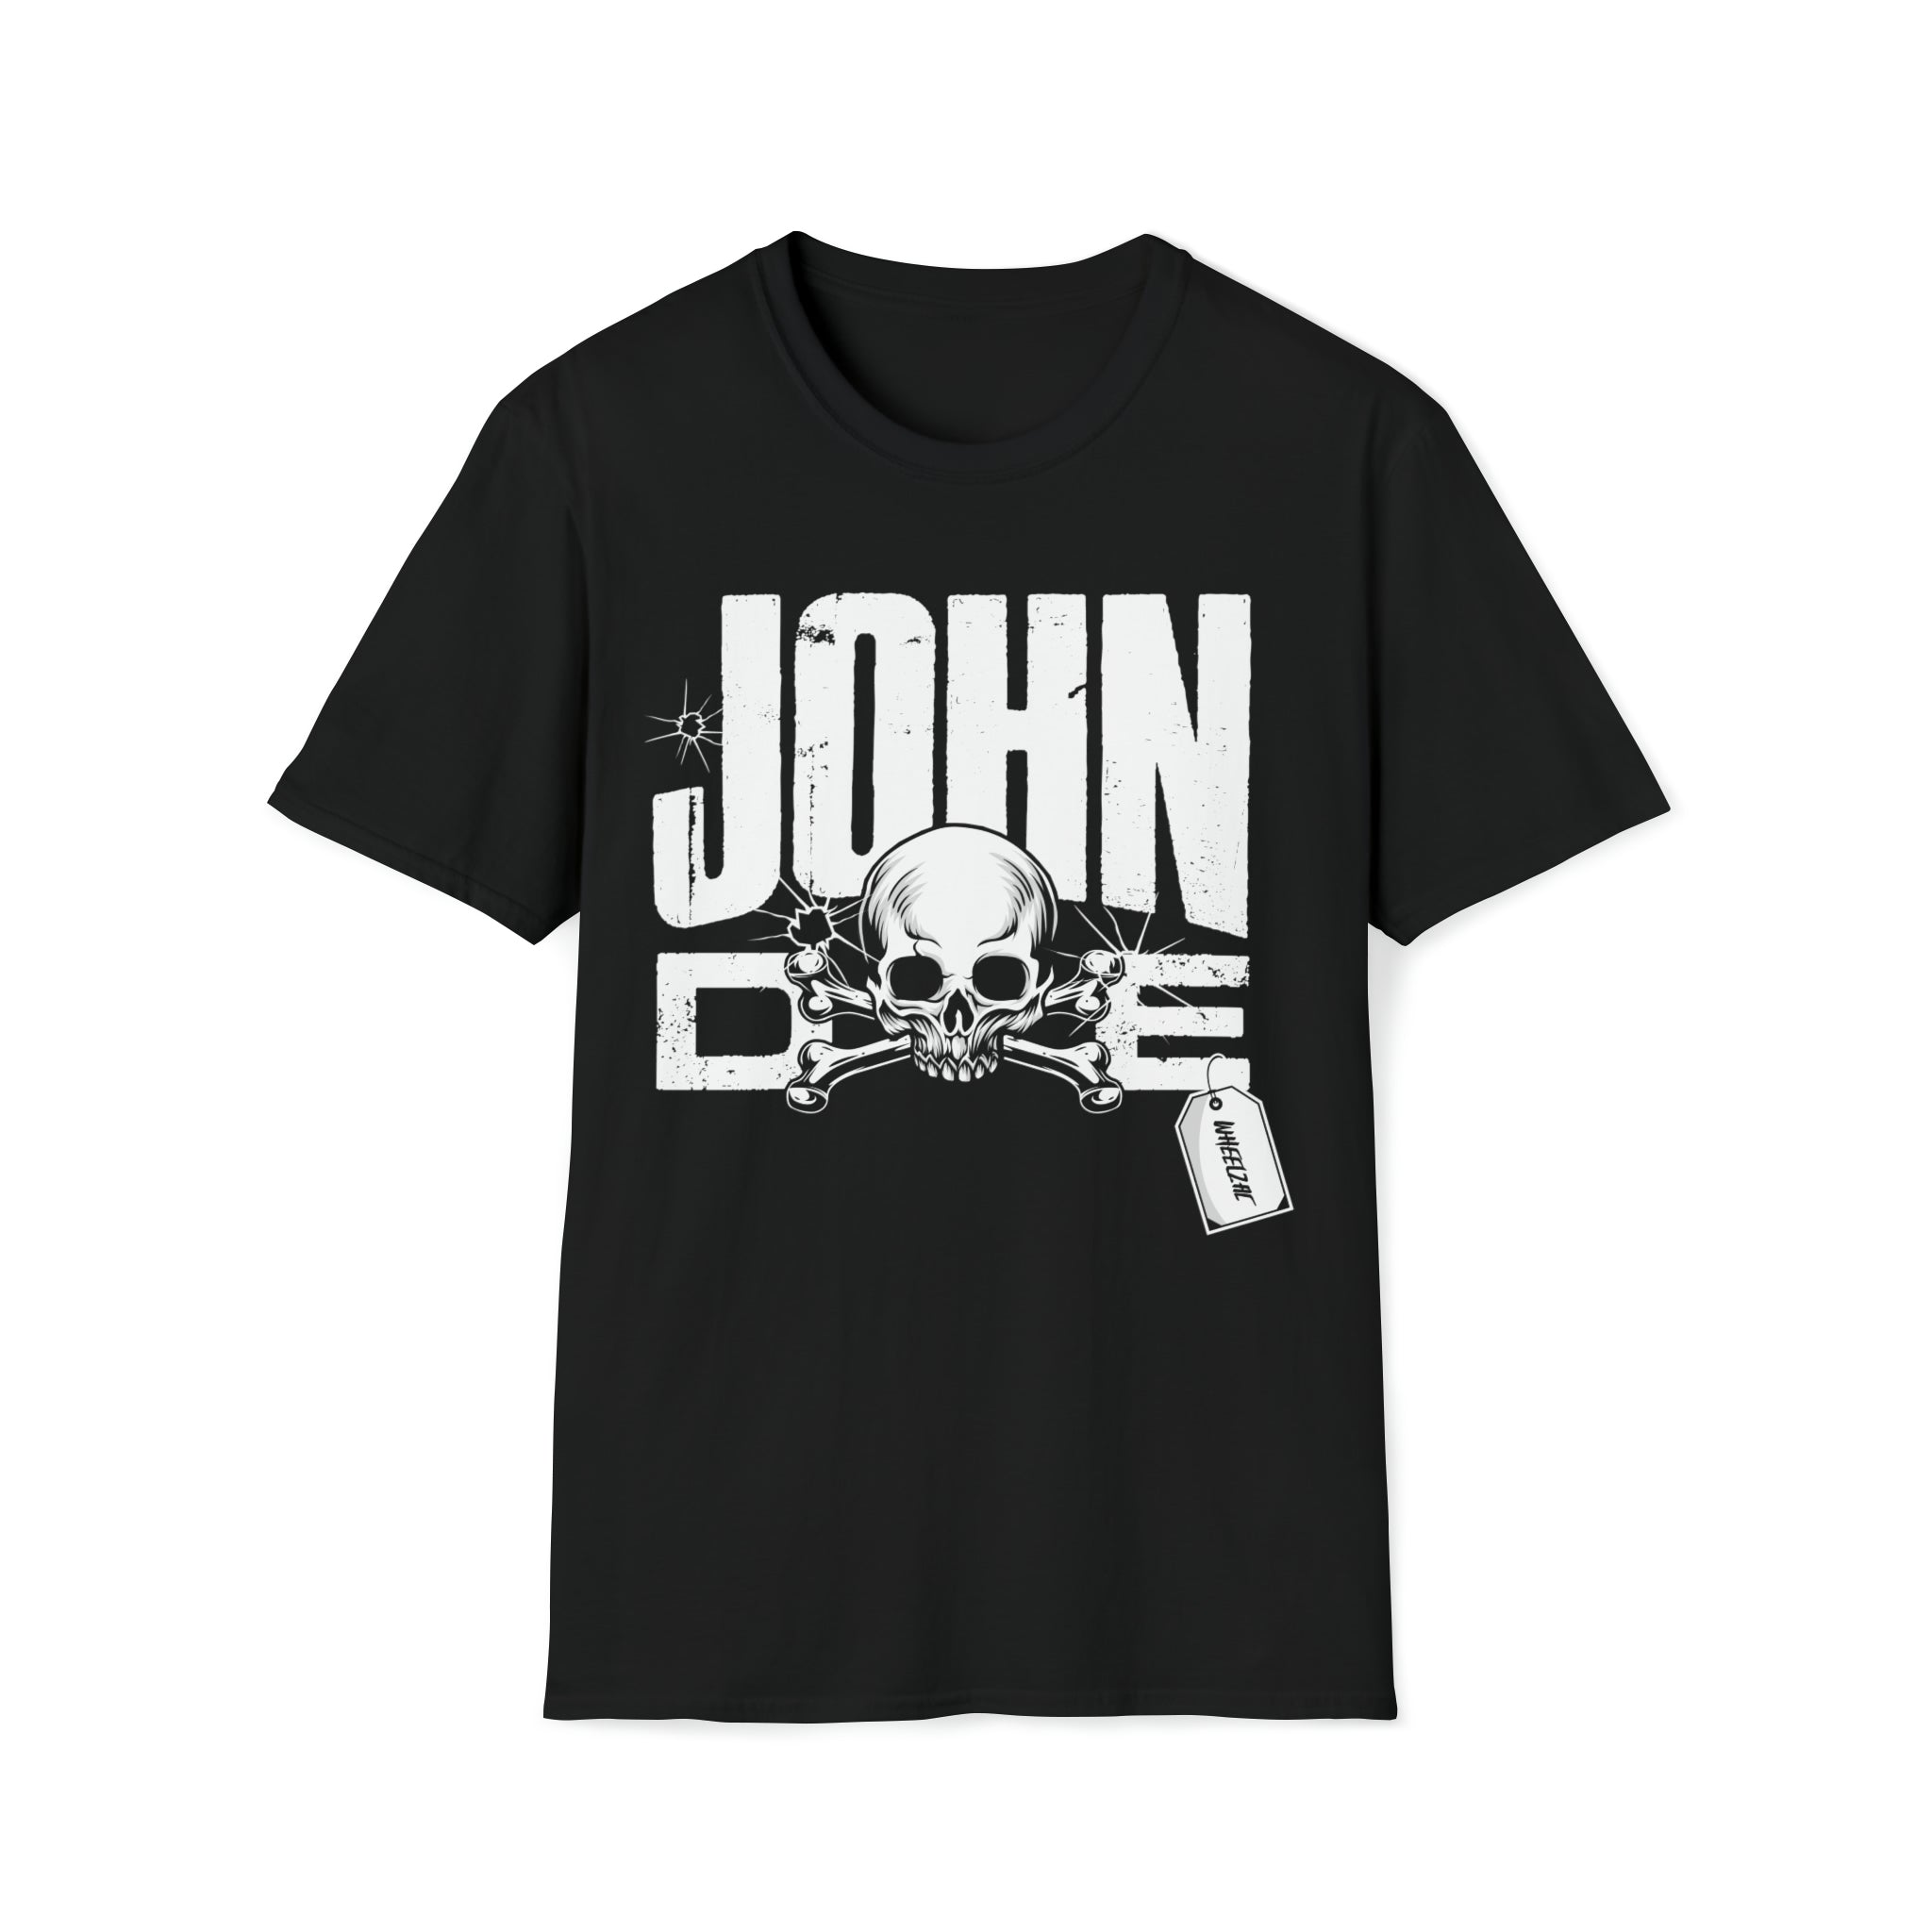 Trendy unisex cotton crewneck shirt for men featuring edgy skull and crossbones anonymous John Doe design inspired by vigilantism. 